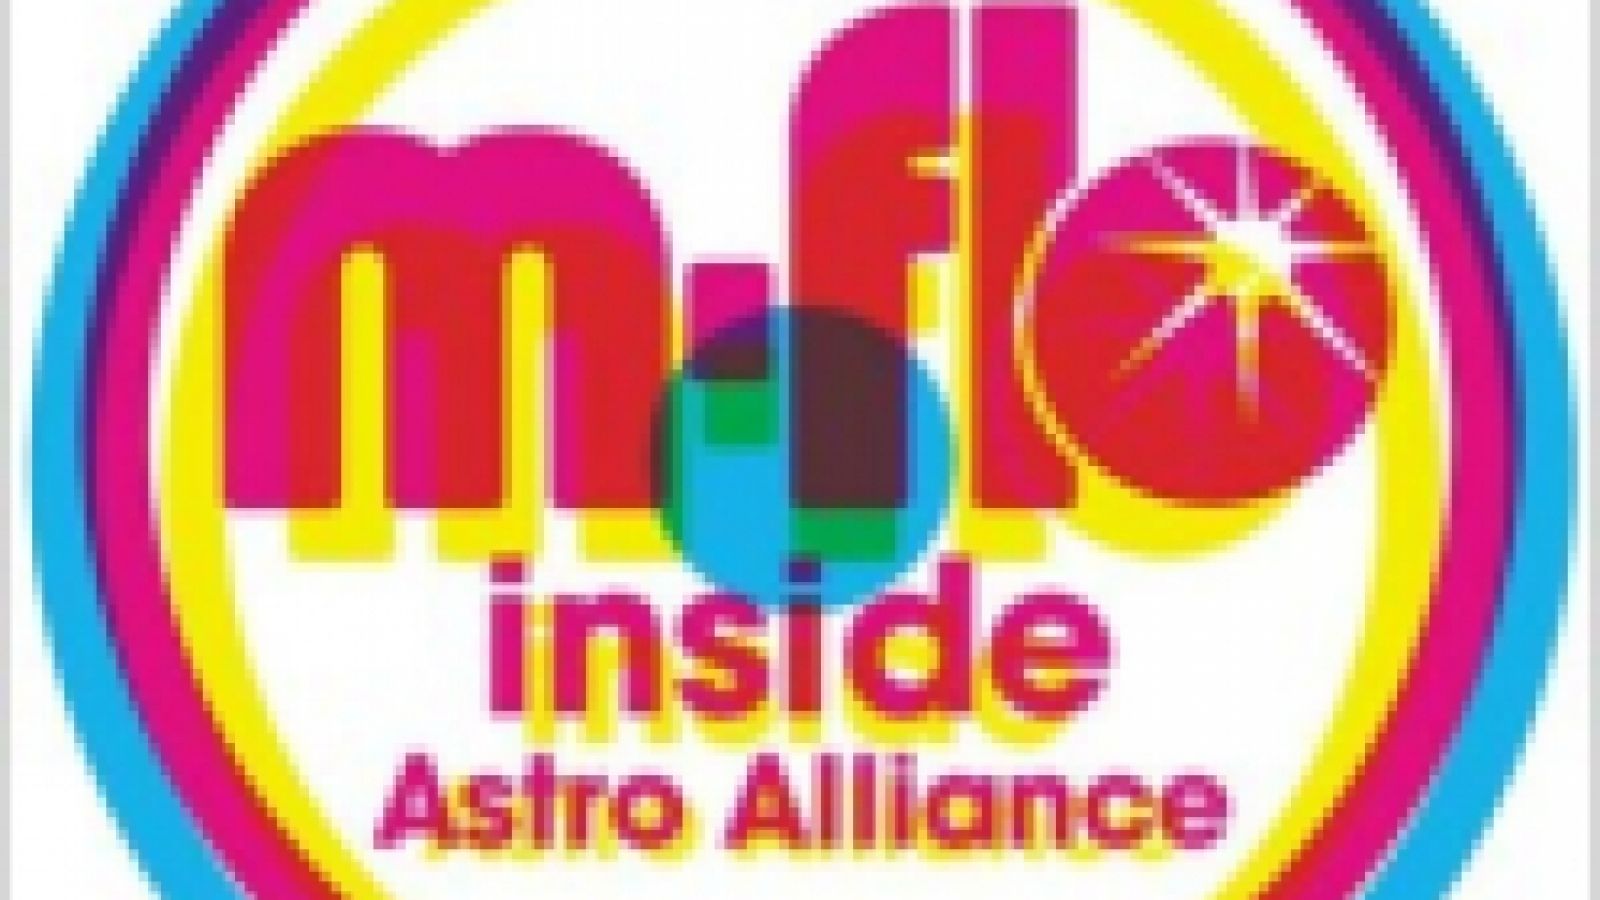 m-flo - inside (Astro Alliance) © JaME